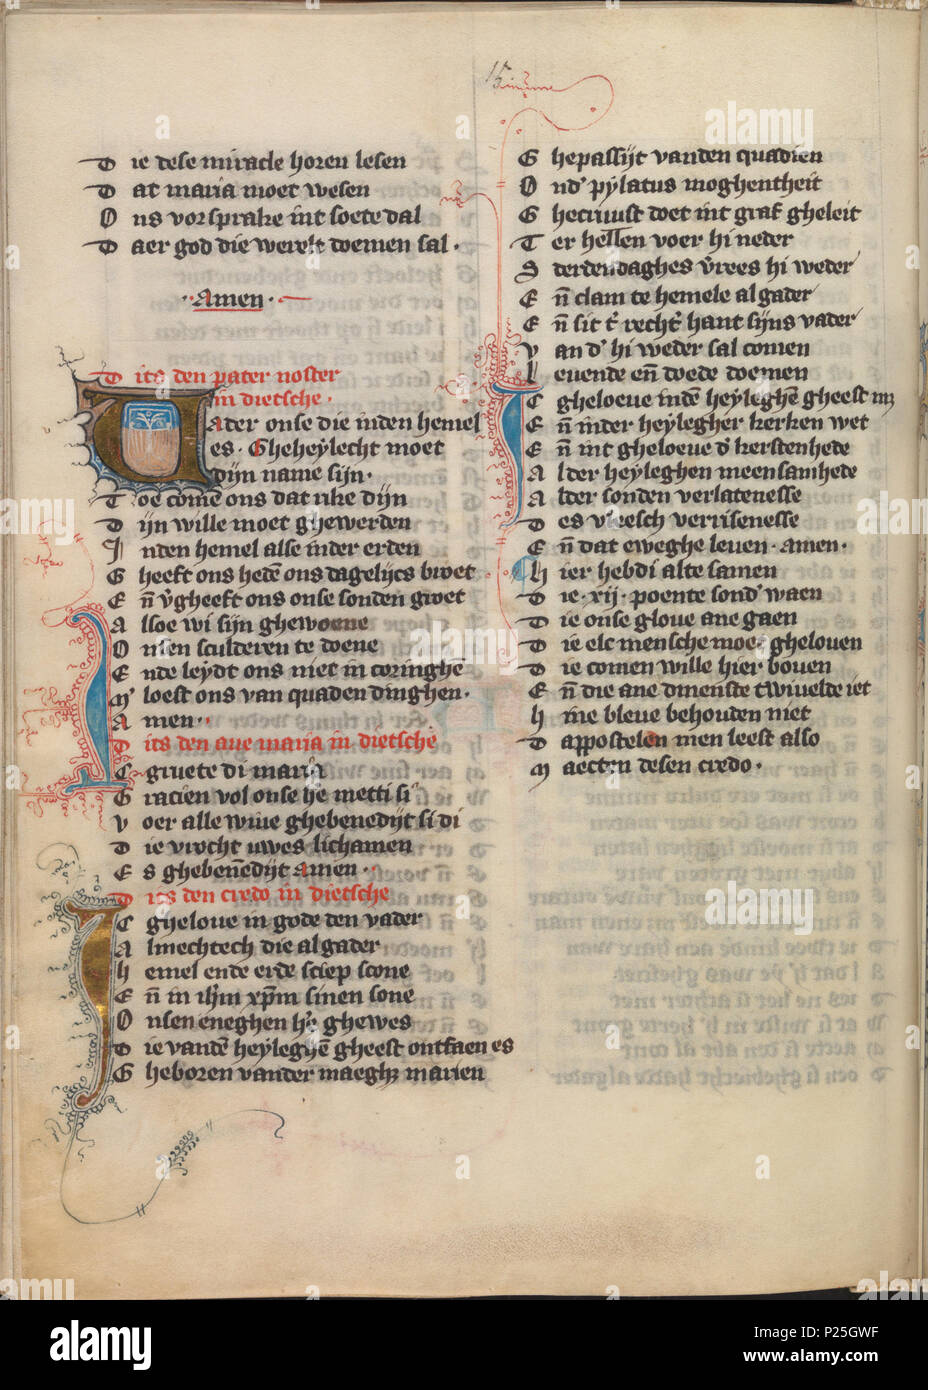 Ave Maria, Pater noster en Credo from Der leken spieghel by Jan van  Boendale (ca. 1280-1351) . Ave Maria, Pater noster en Credo from Der leken  spieghel by Jan van Boendale (